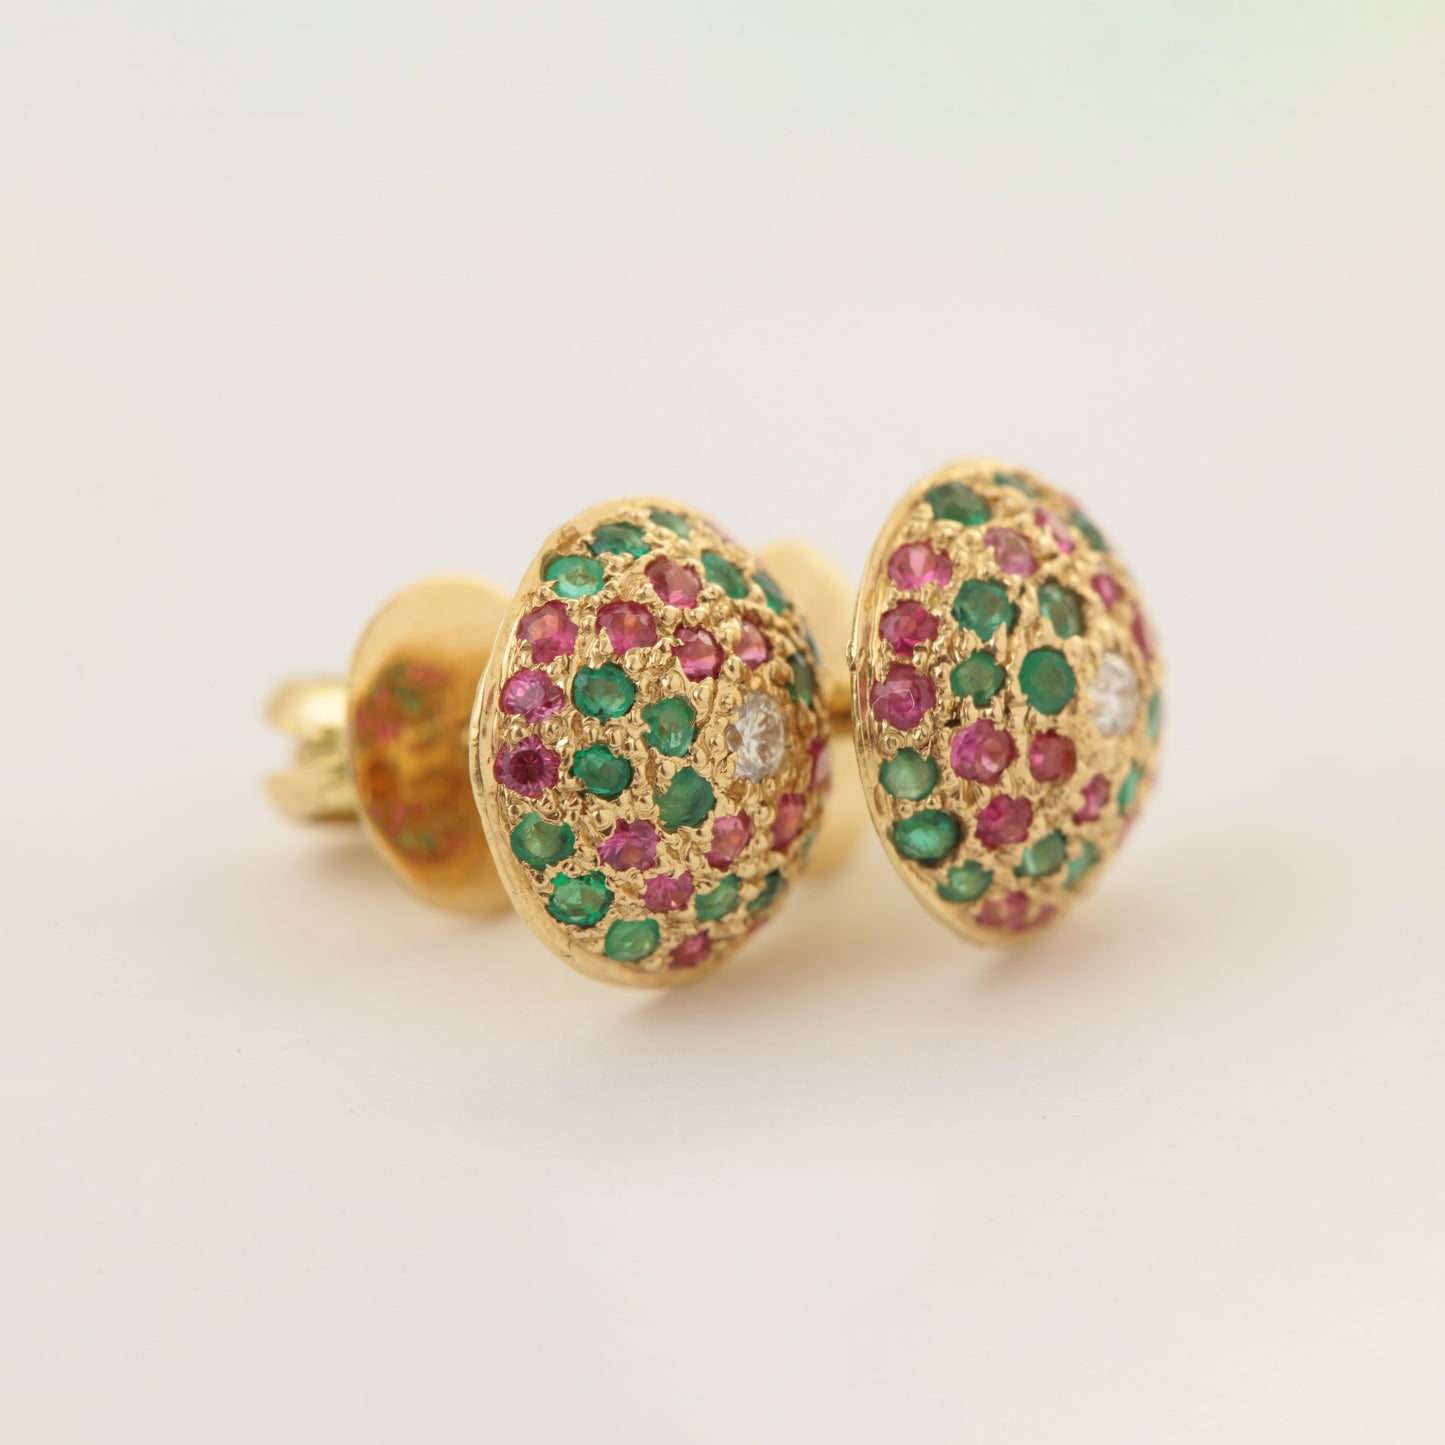 The Babyrasa Ishani Gold, Ruby, Emerald and Diamond Ear Studs by Rasvihar